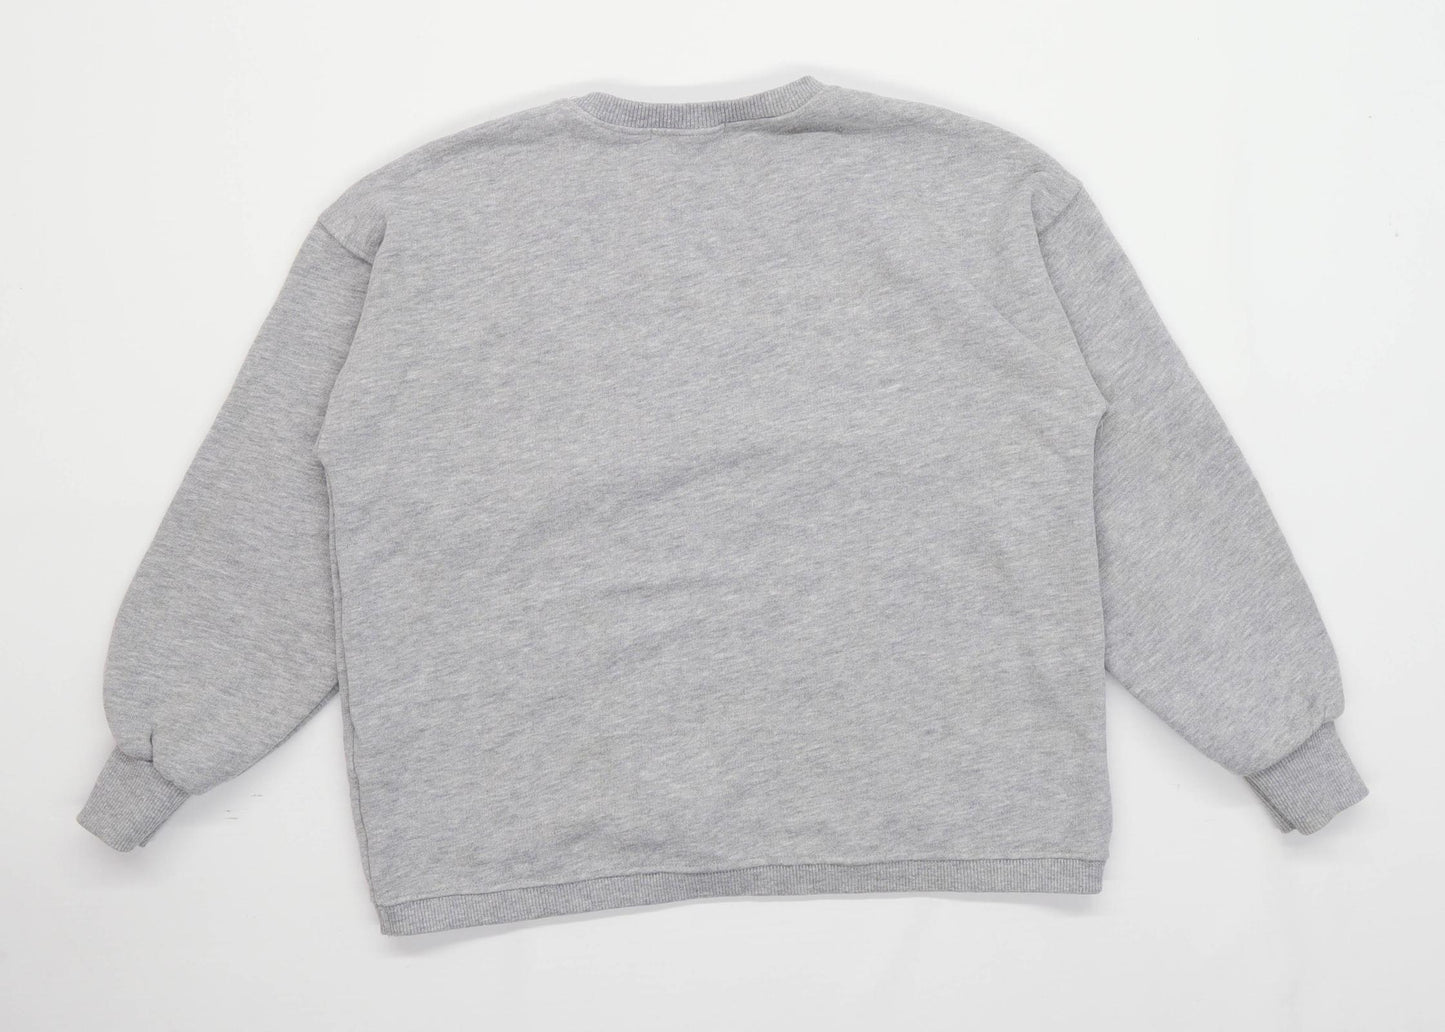 Zara Girls Graphic Grey Together Jewelled Sweatshirt Age 10 Years